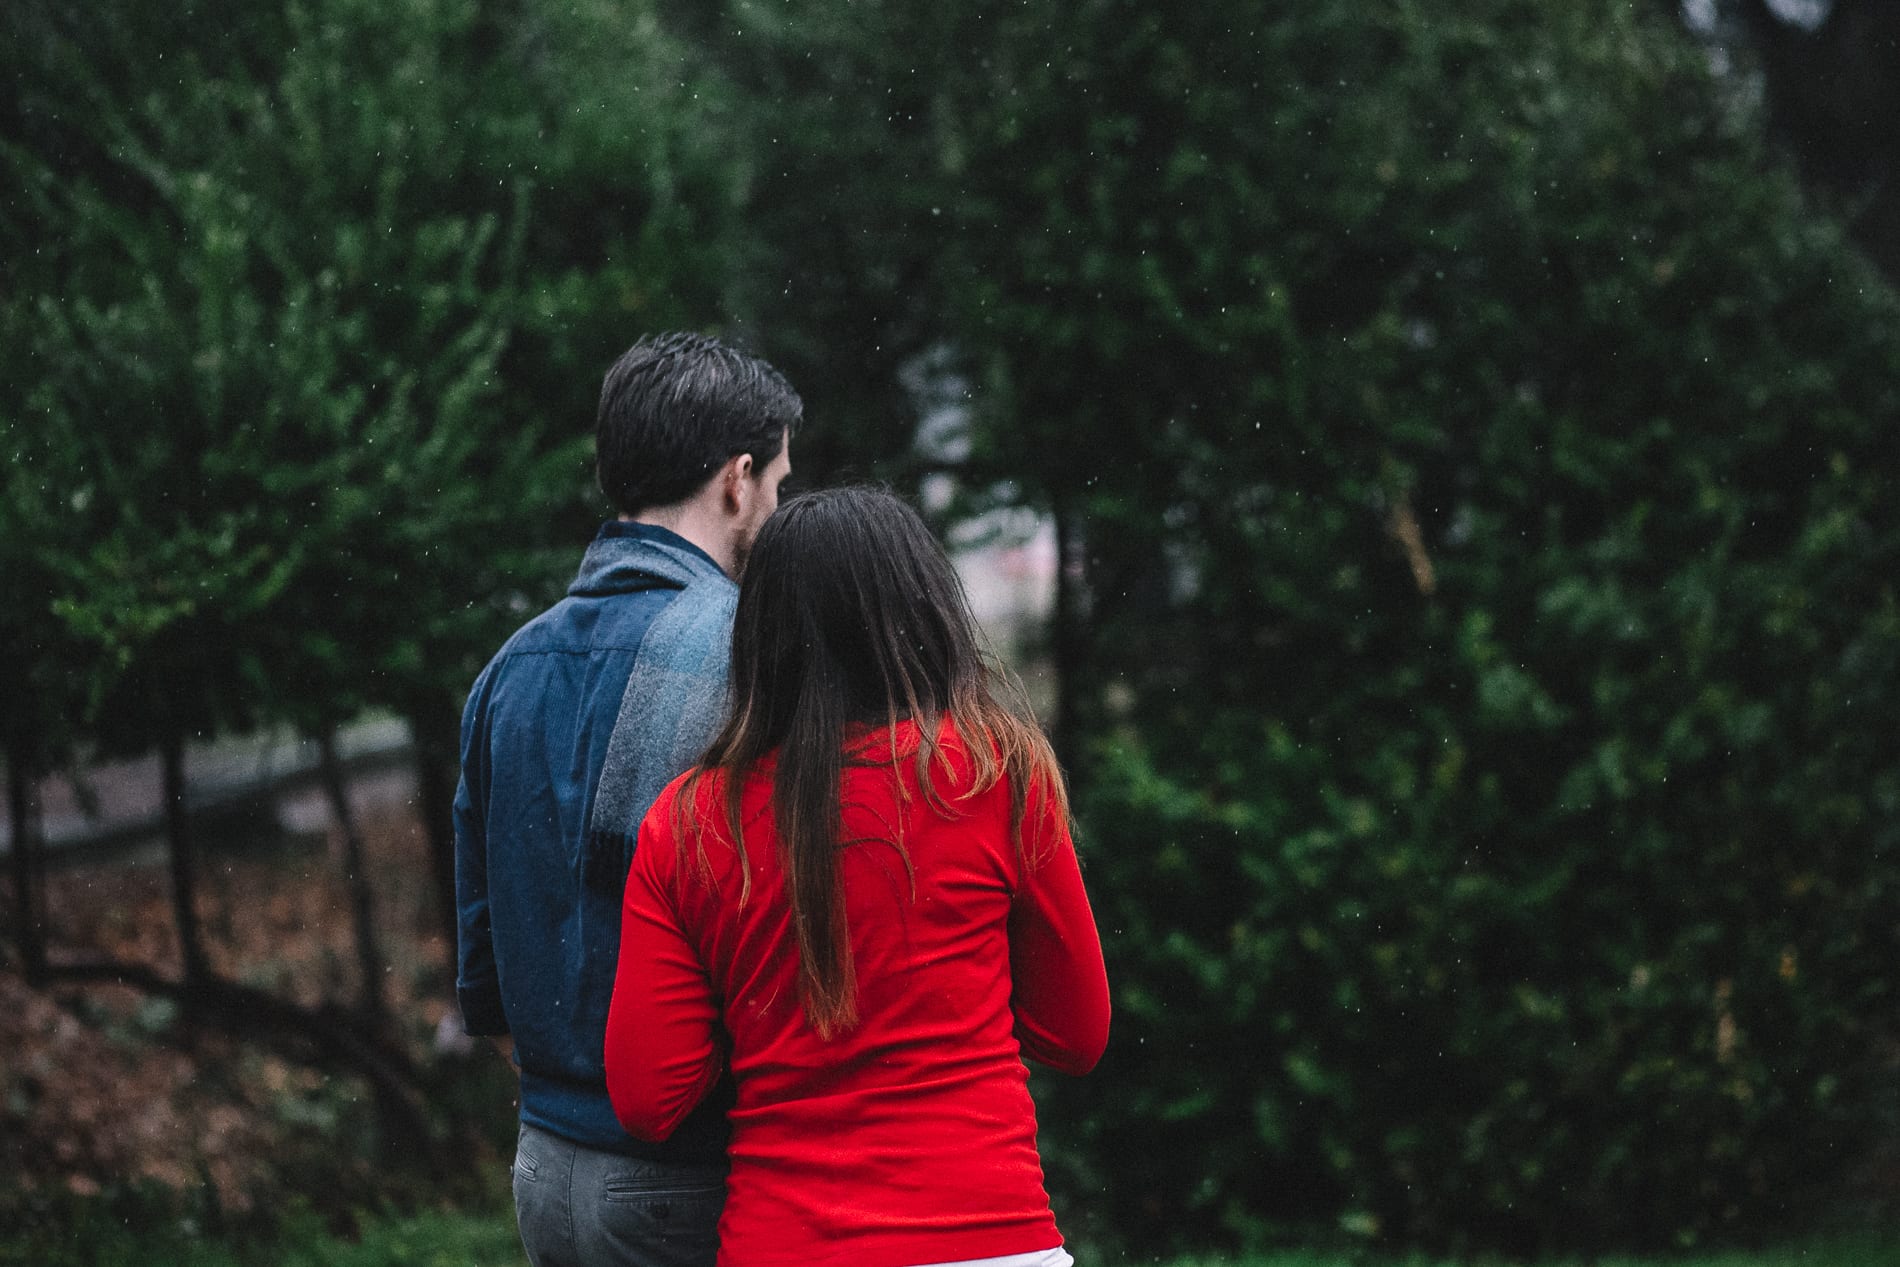 redding-caldwell-lake-park-gazebo-couples-photo-7